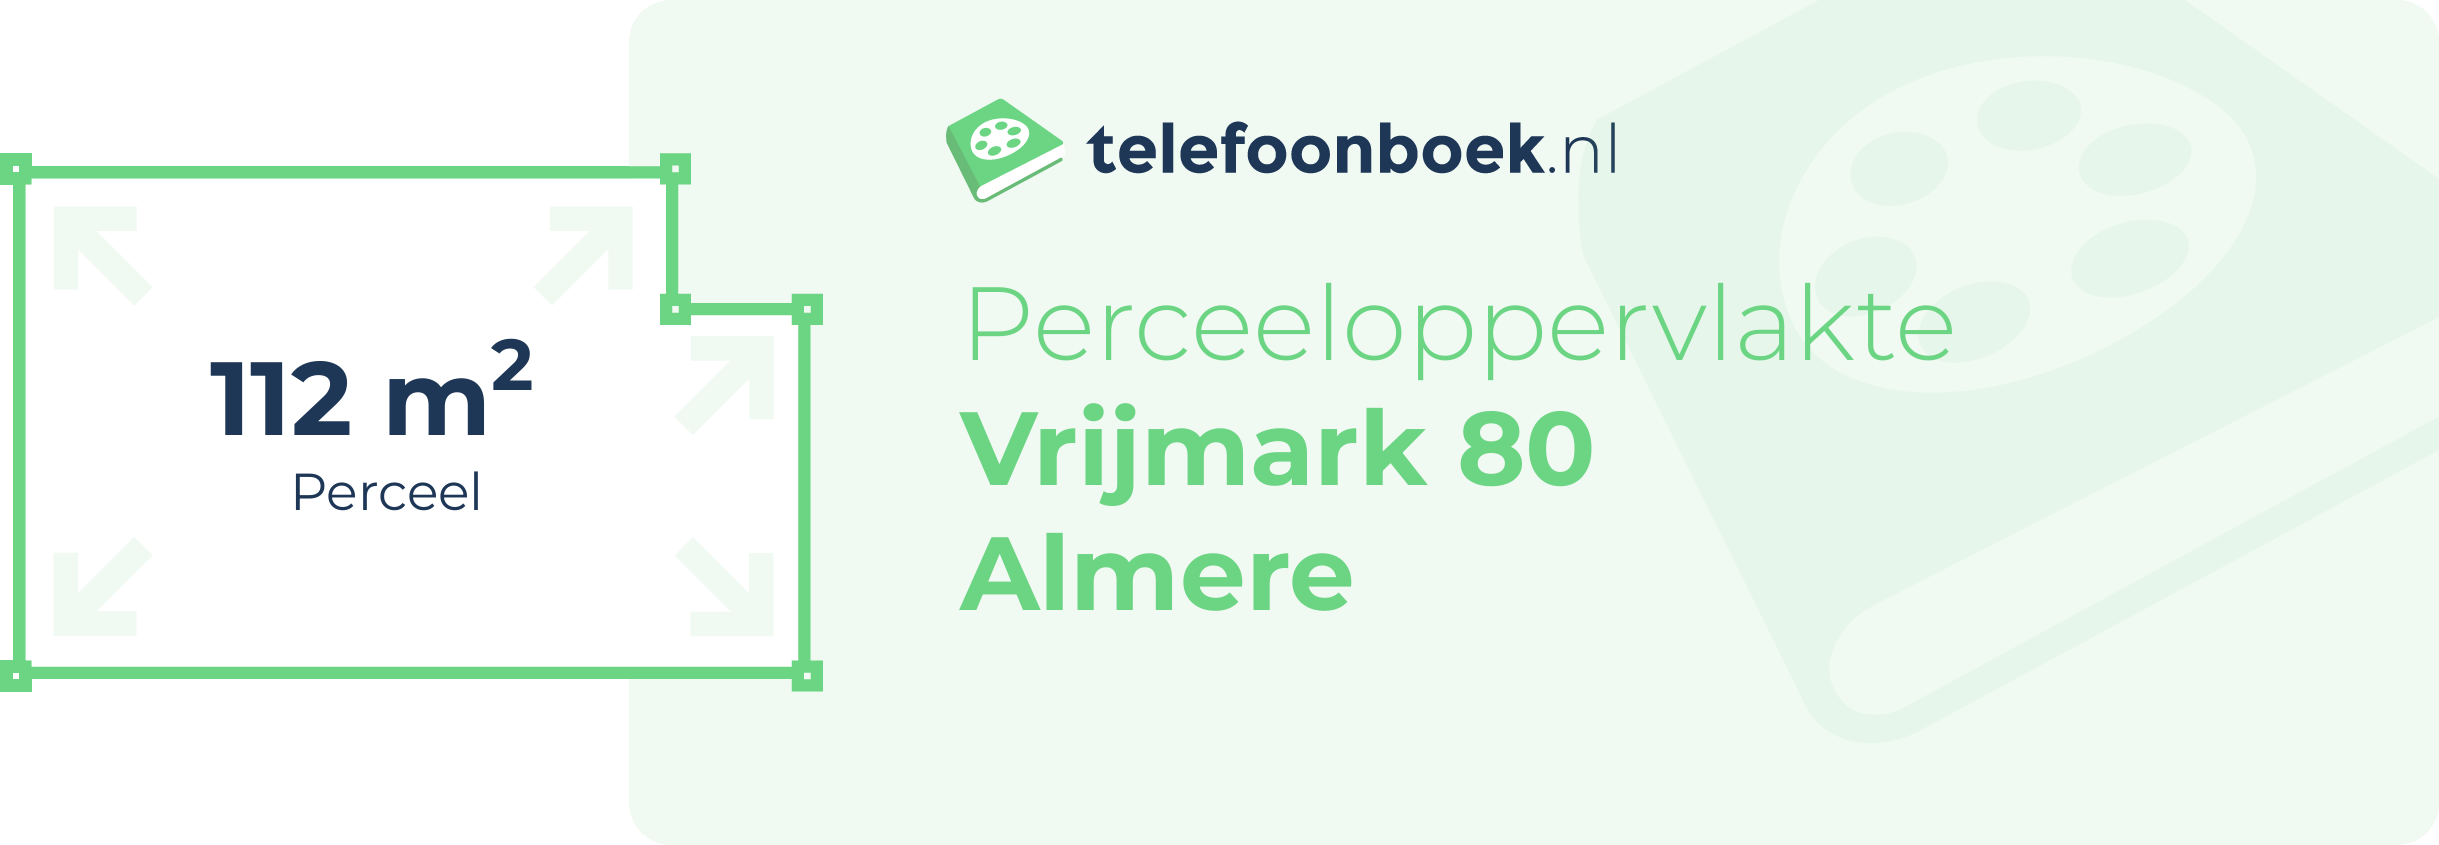 Perceeloppervlakte Vrijmark 80 Almere